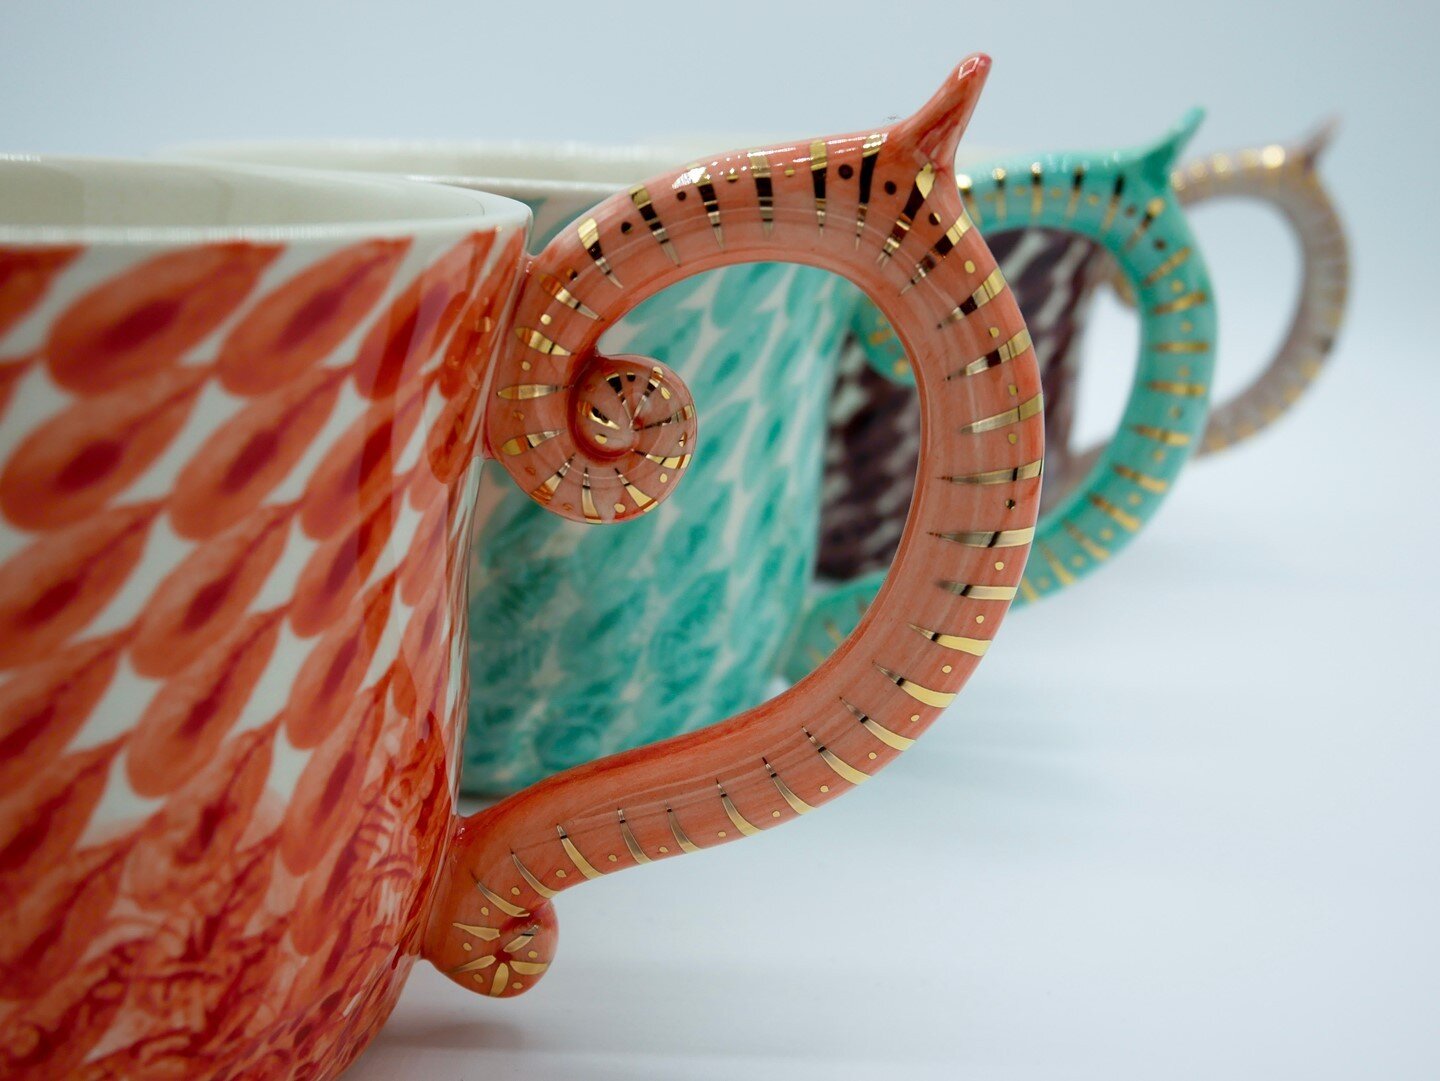 We have a whole new collection of beautiful large tea mugs by @mirandaberrowceramics in a range of spring colours 🍃⁠
⁠
⁠
⁠
#Risebakestore #Risefarmshop #Risemarketandbakery #Handmade #Supportlocal #mirandaberrowceramics #ceramics #springcolours #art